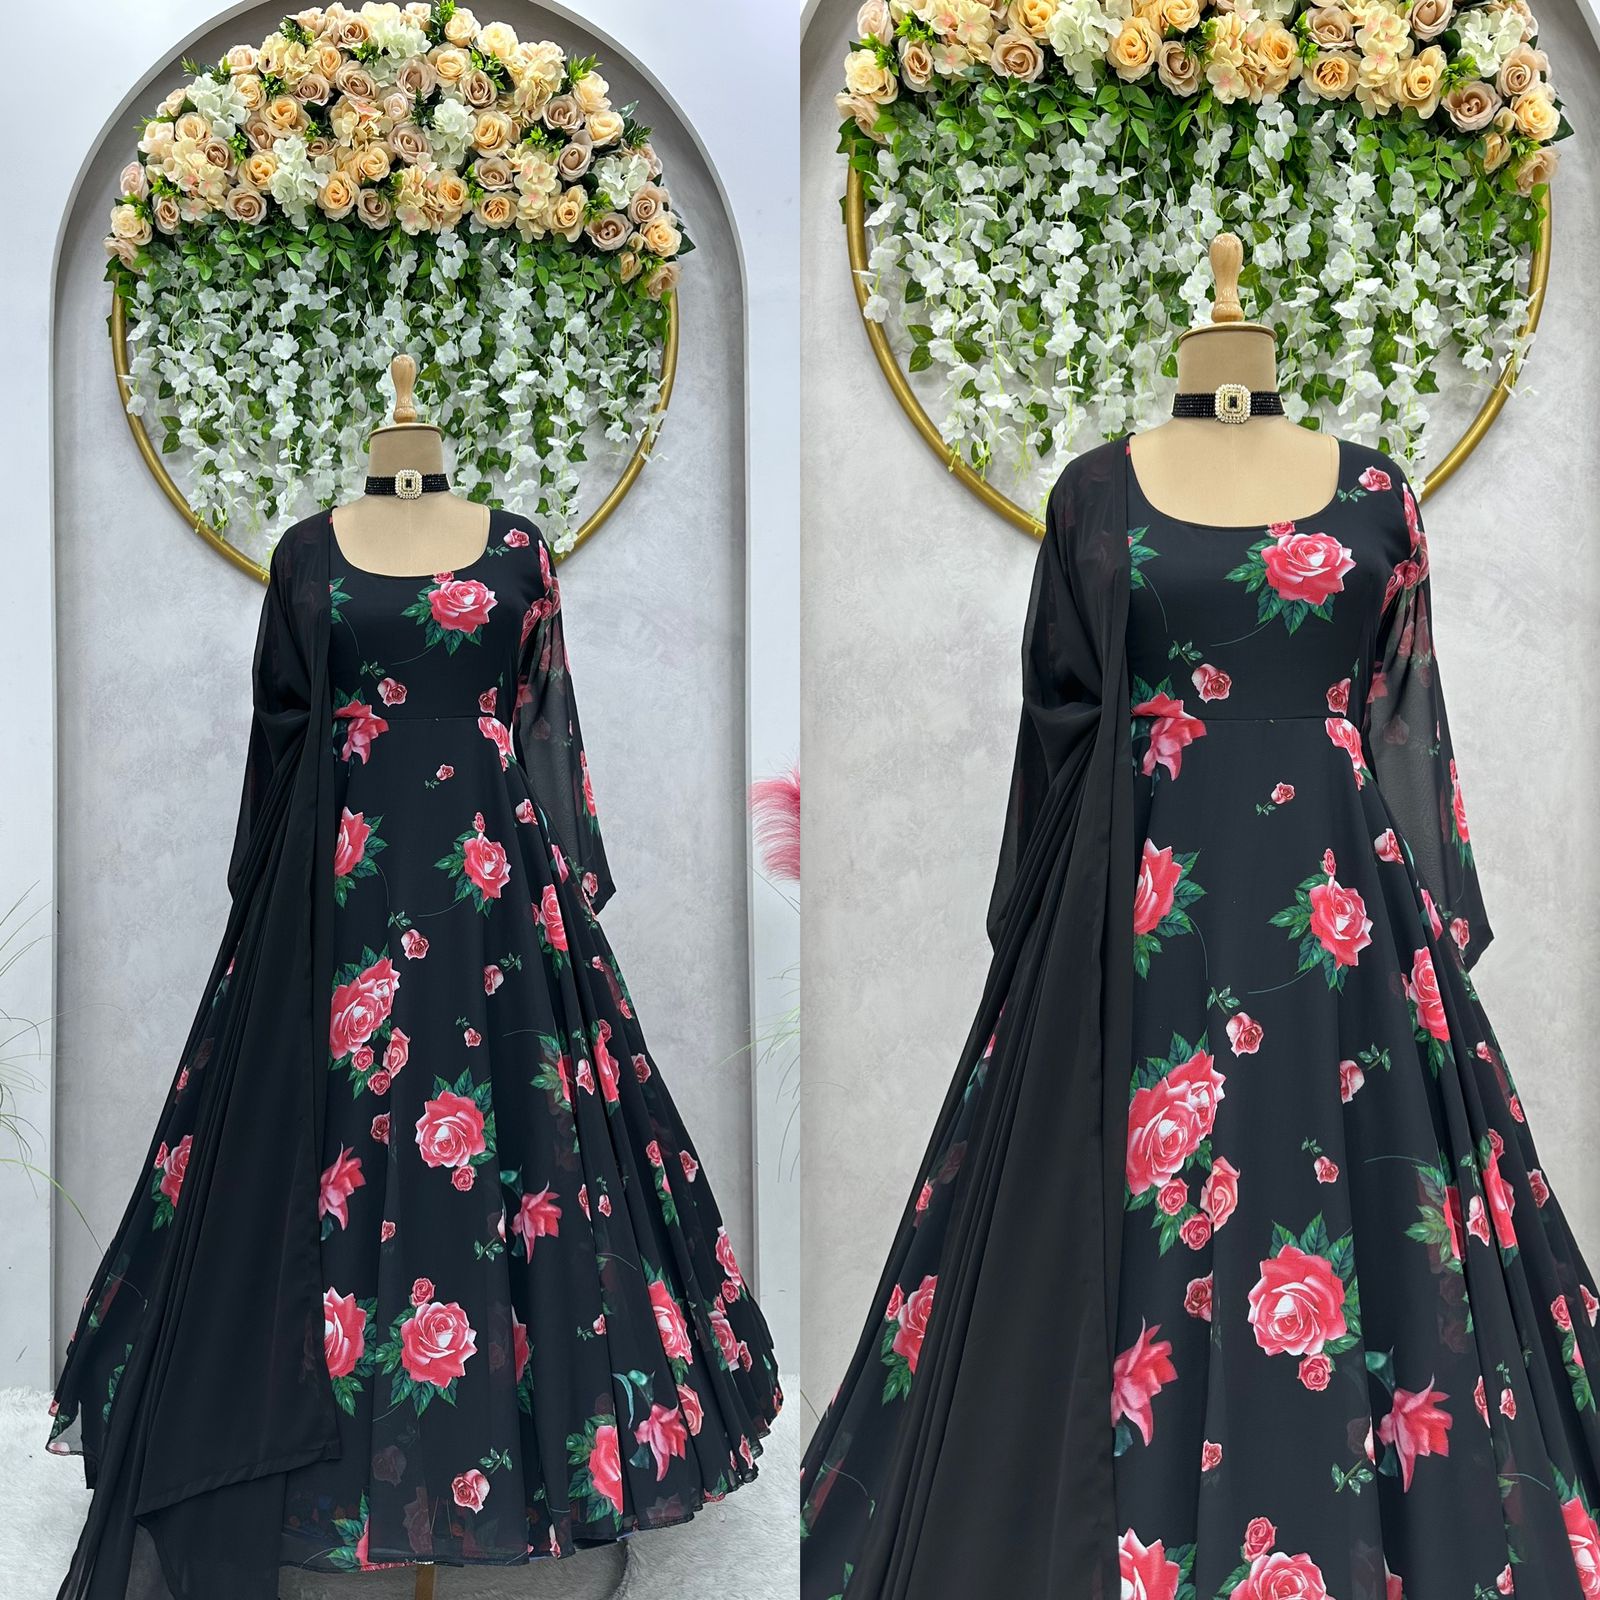 Popular Black Wedding Gown and Black Wedding Designer Gown Online Shopping